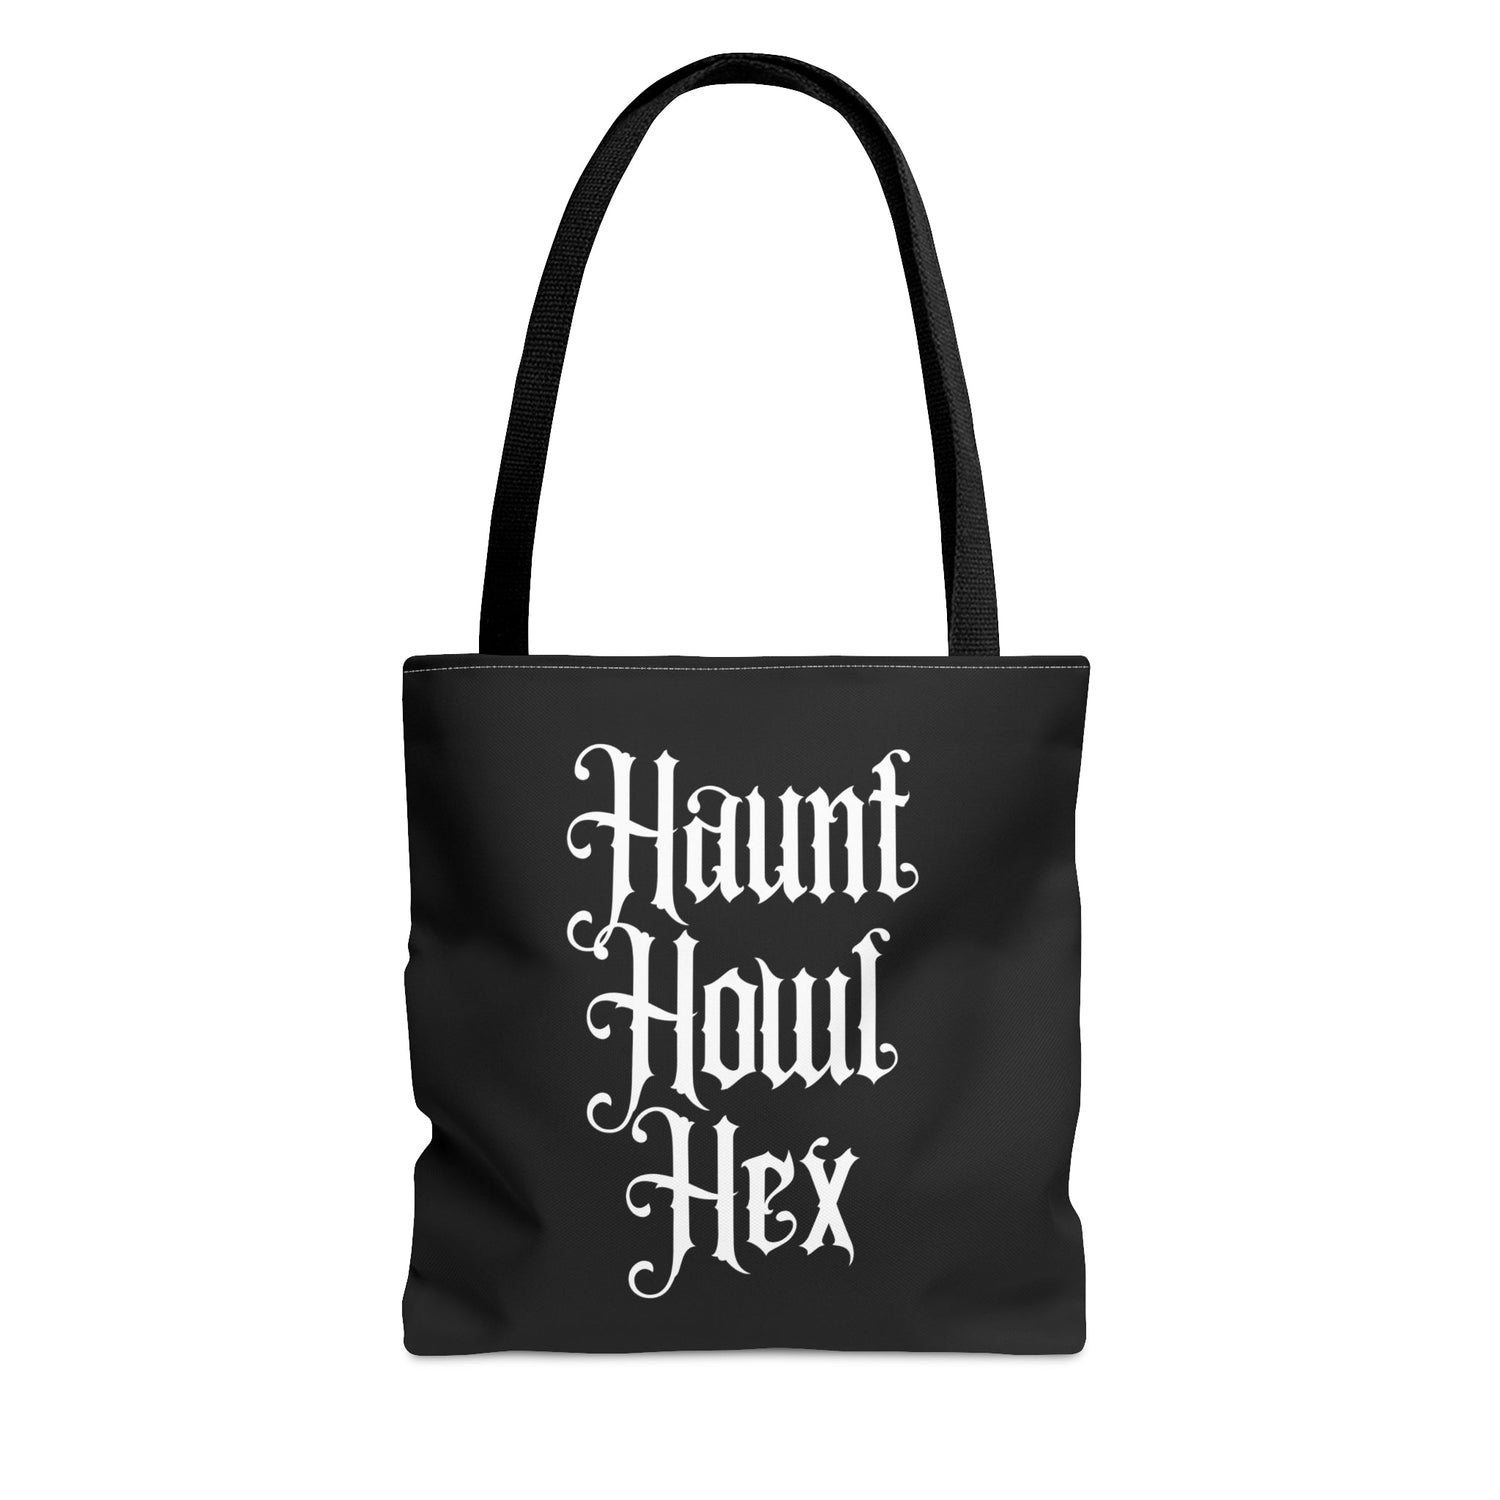 Haunt Howl Hex Tote Bag - Driftless Enchantments